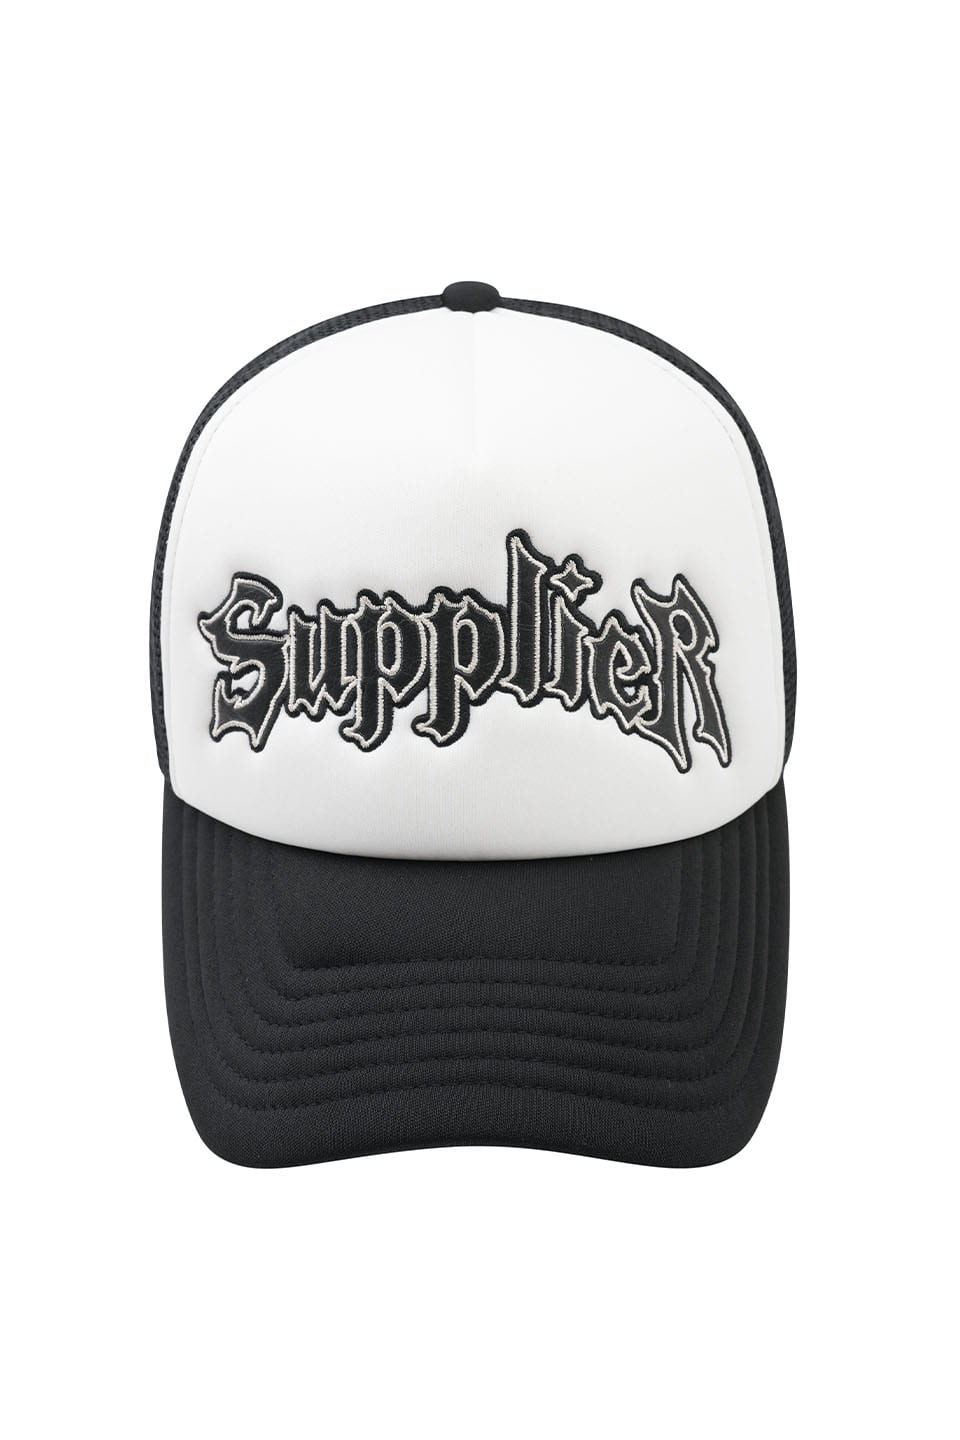 Supplier - Cross College Logo Mesh Cap サプライヤー キャップ 帽子